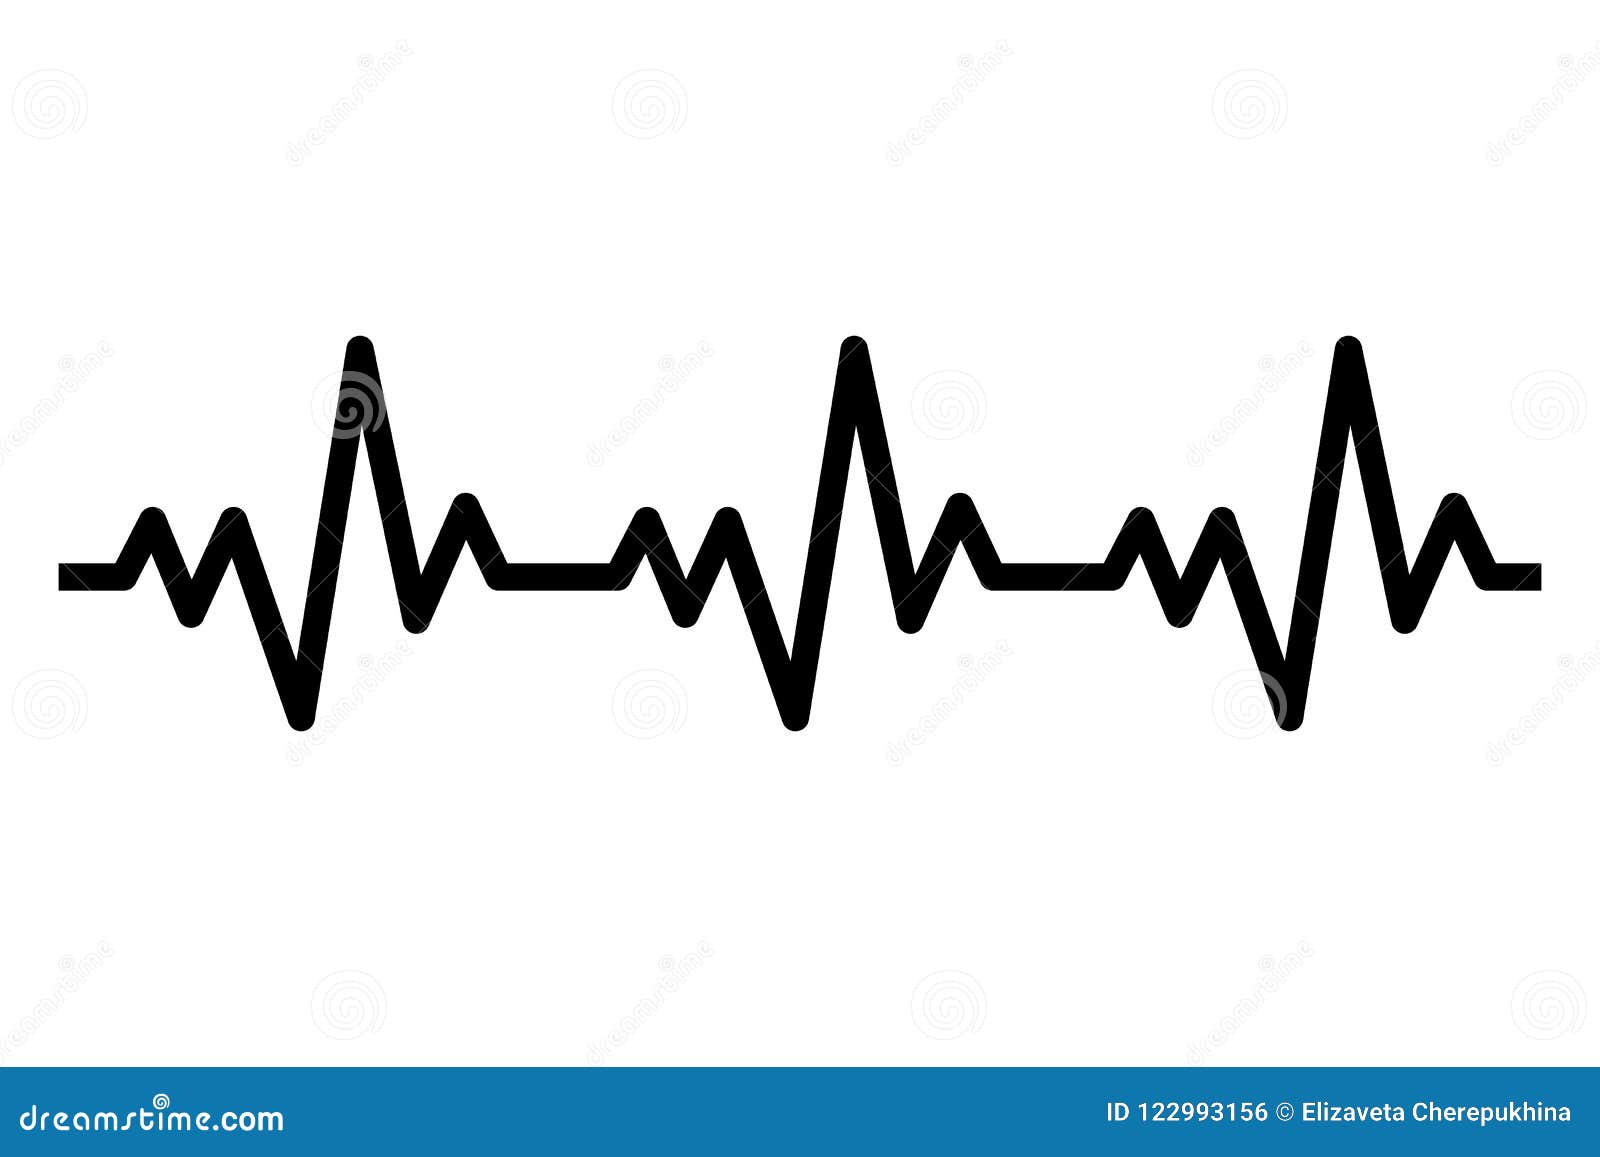 heartbeat line icon. heart rhytm. ecg. cardiogram